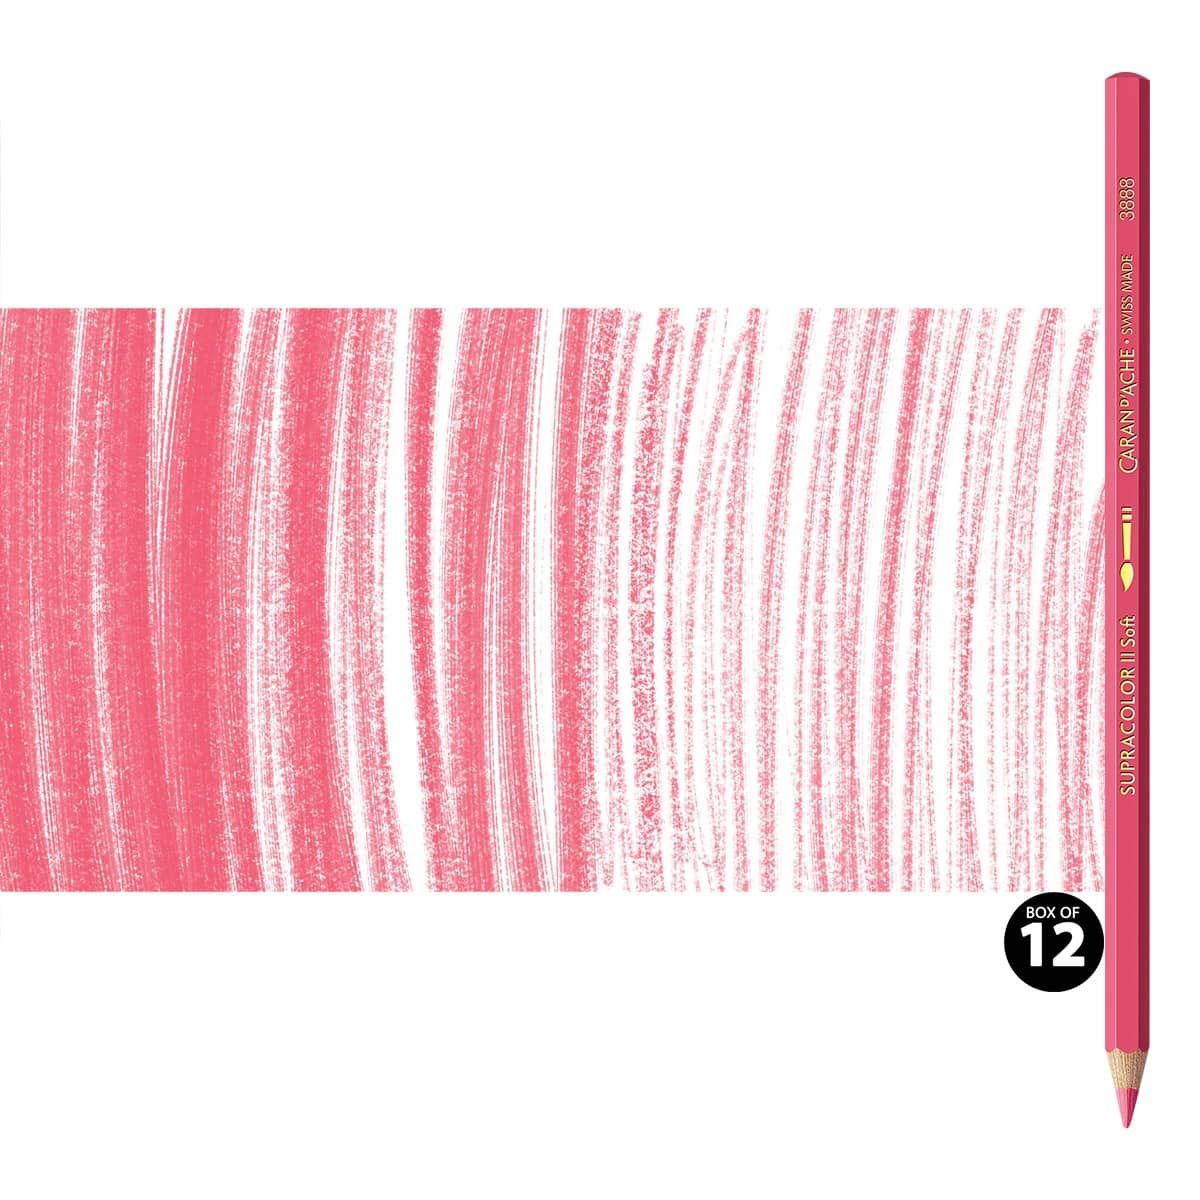 Supracolor II Watercolor Pencils Box of 12 No. 270 - Raspberry Red